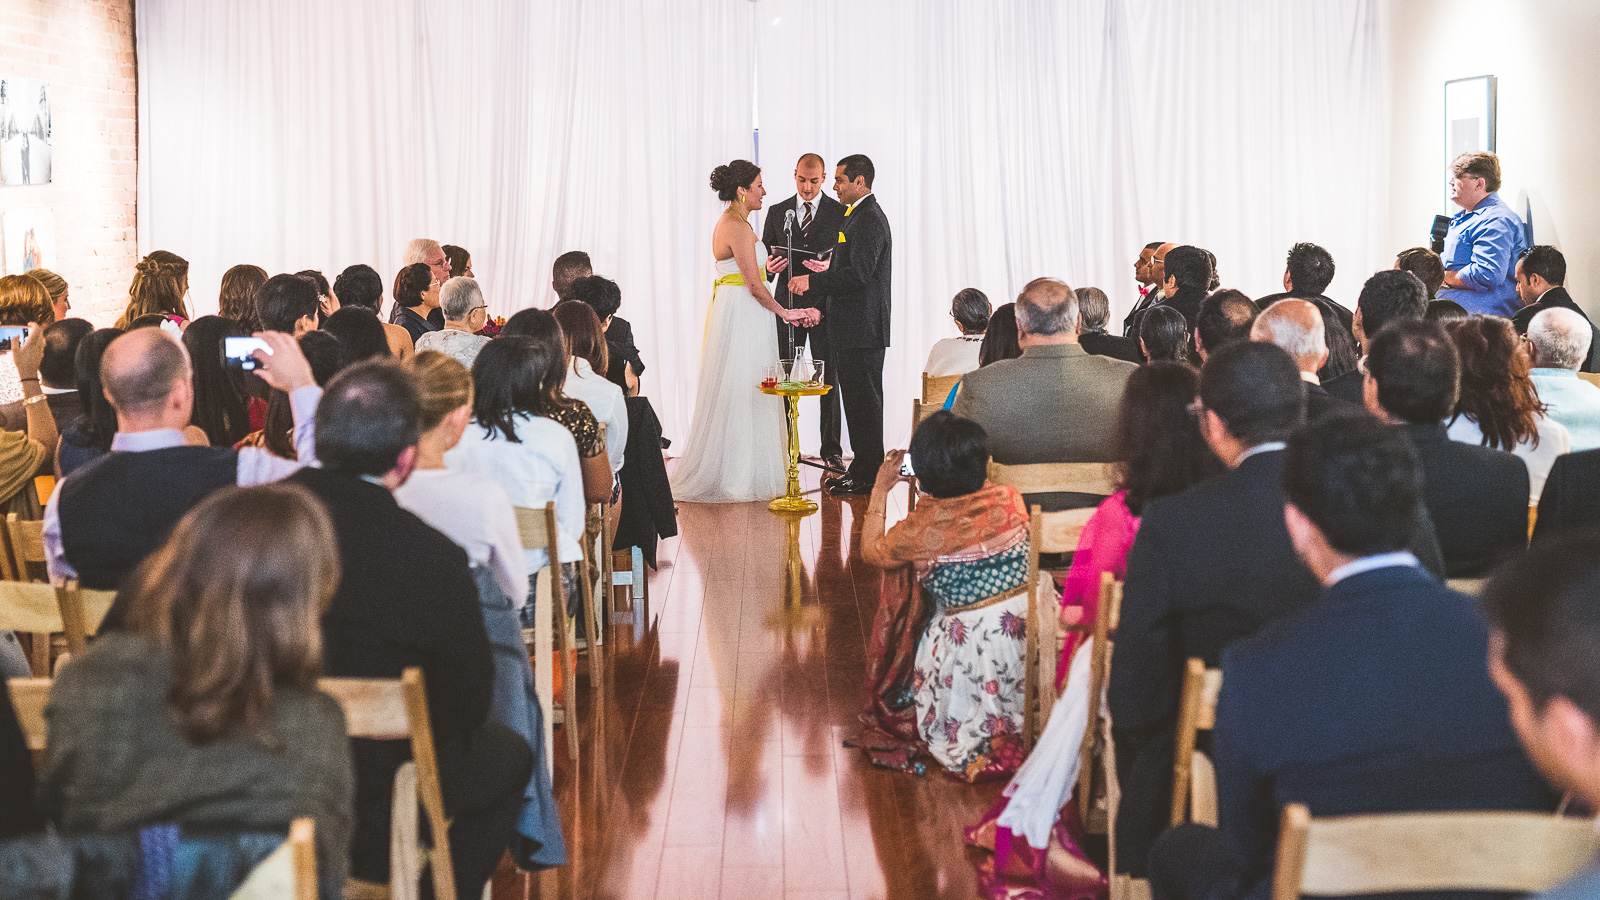 32 ceremony photos at chicago wedding